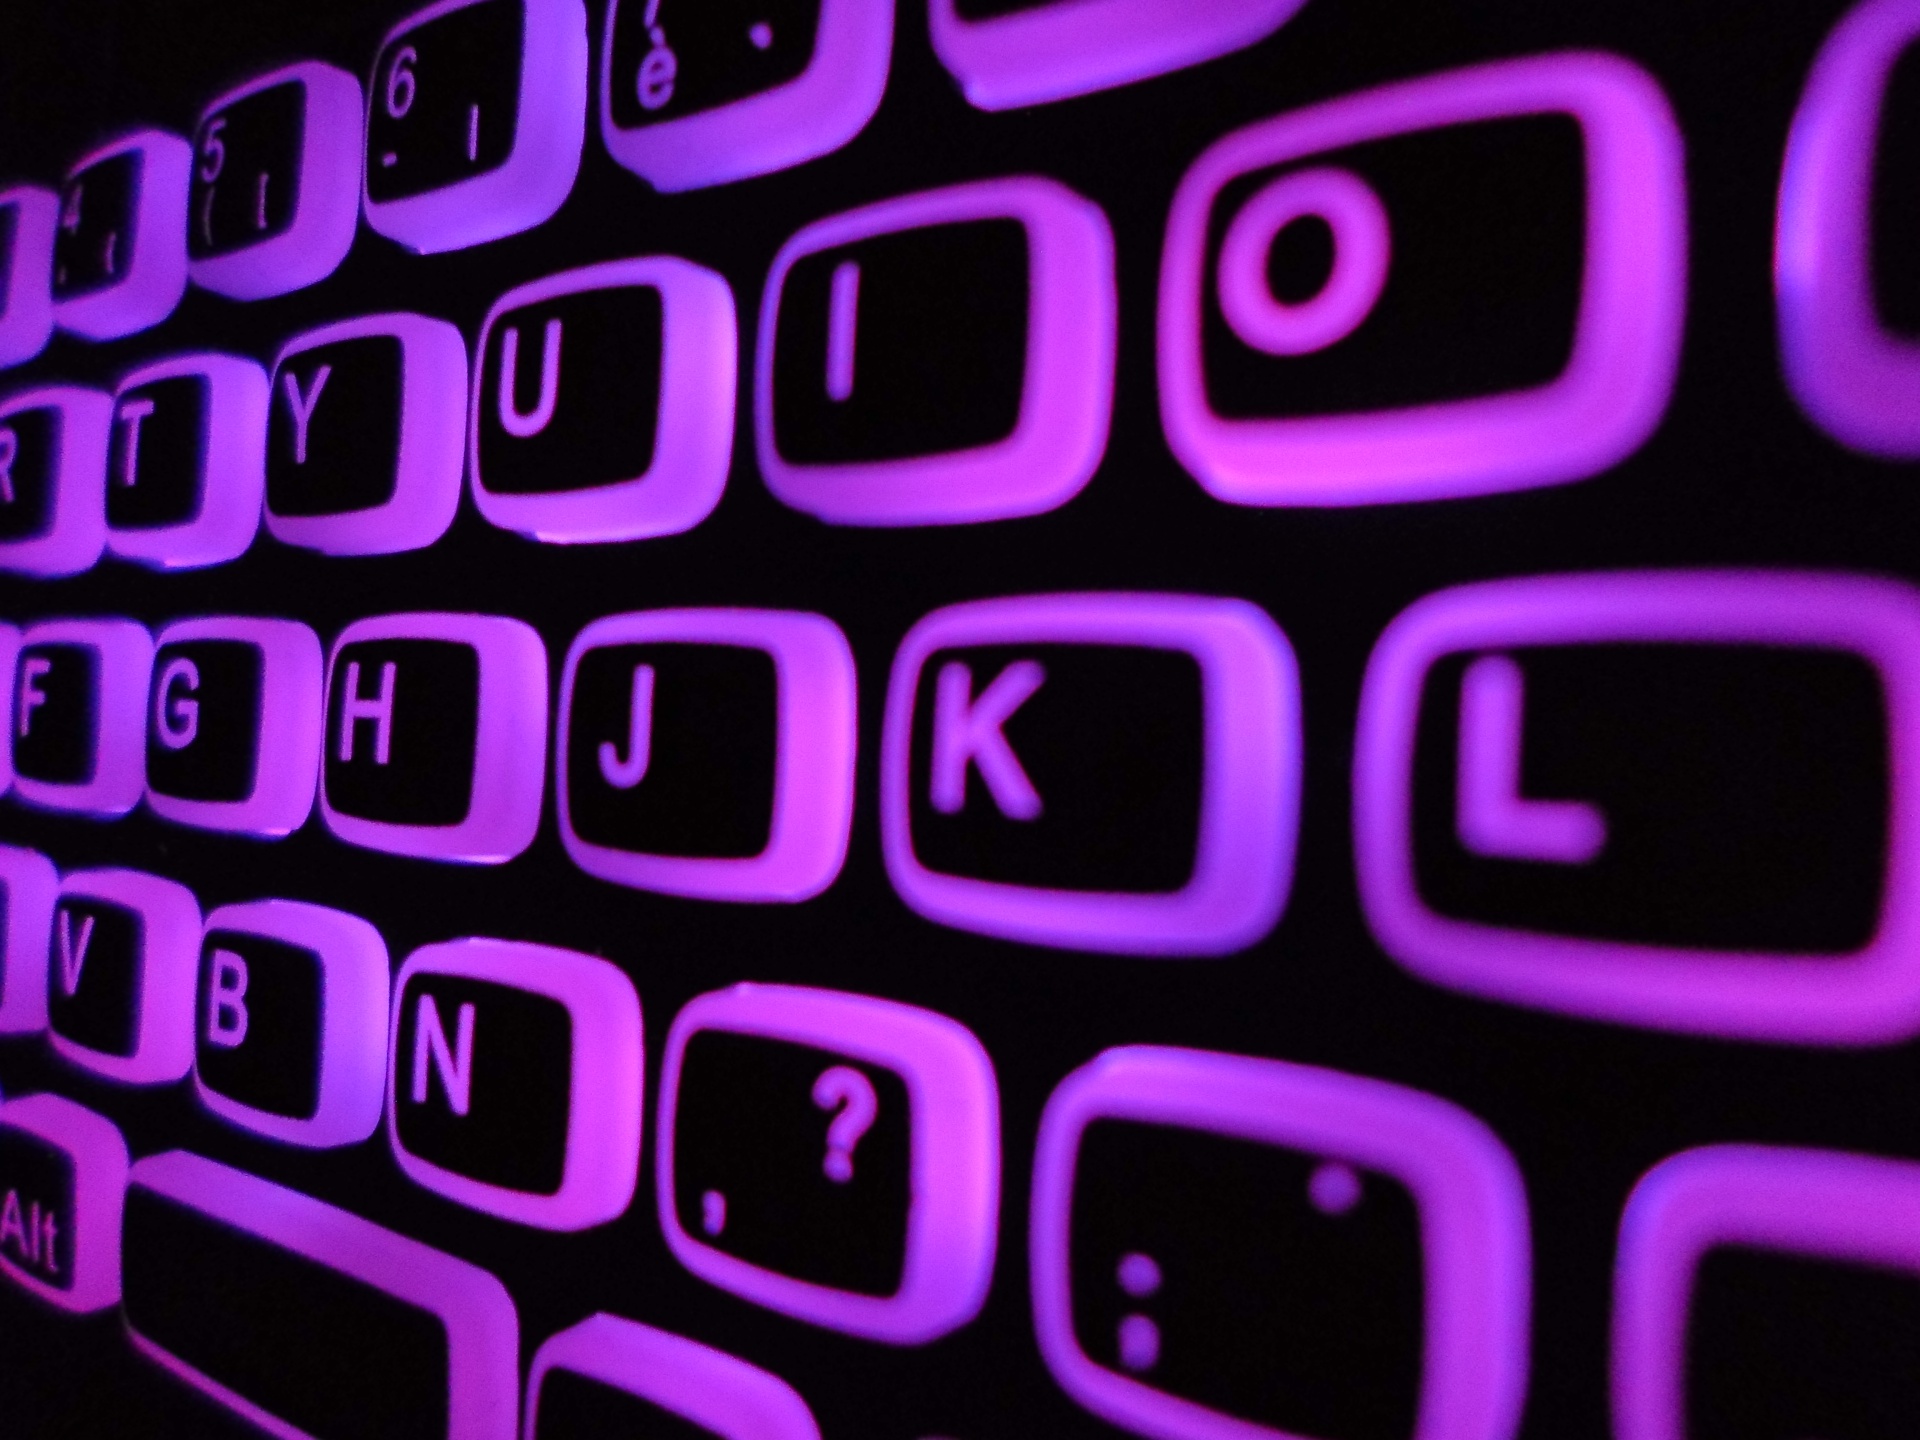 Purple Backlit Azerty Keyboard